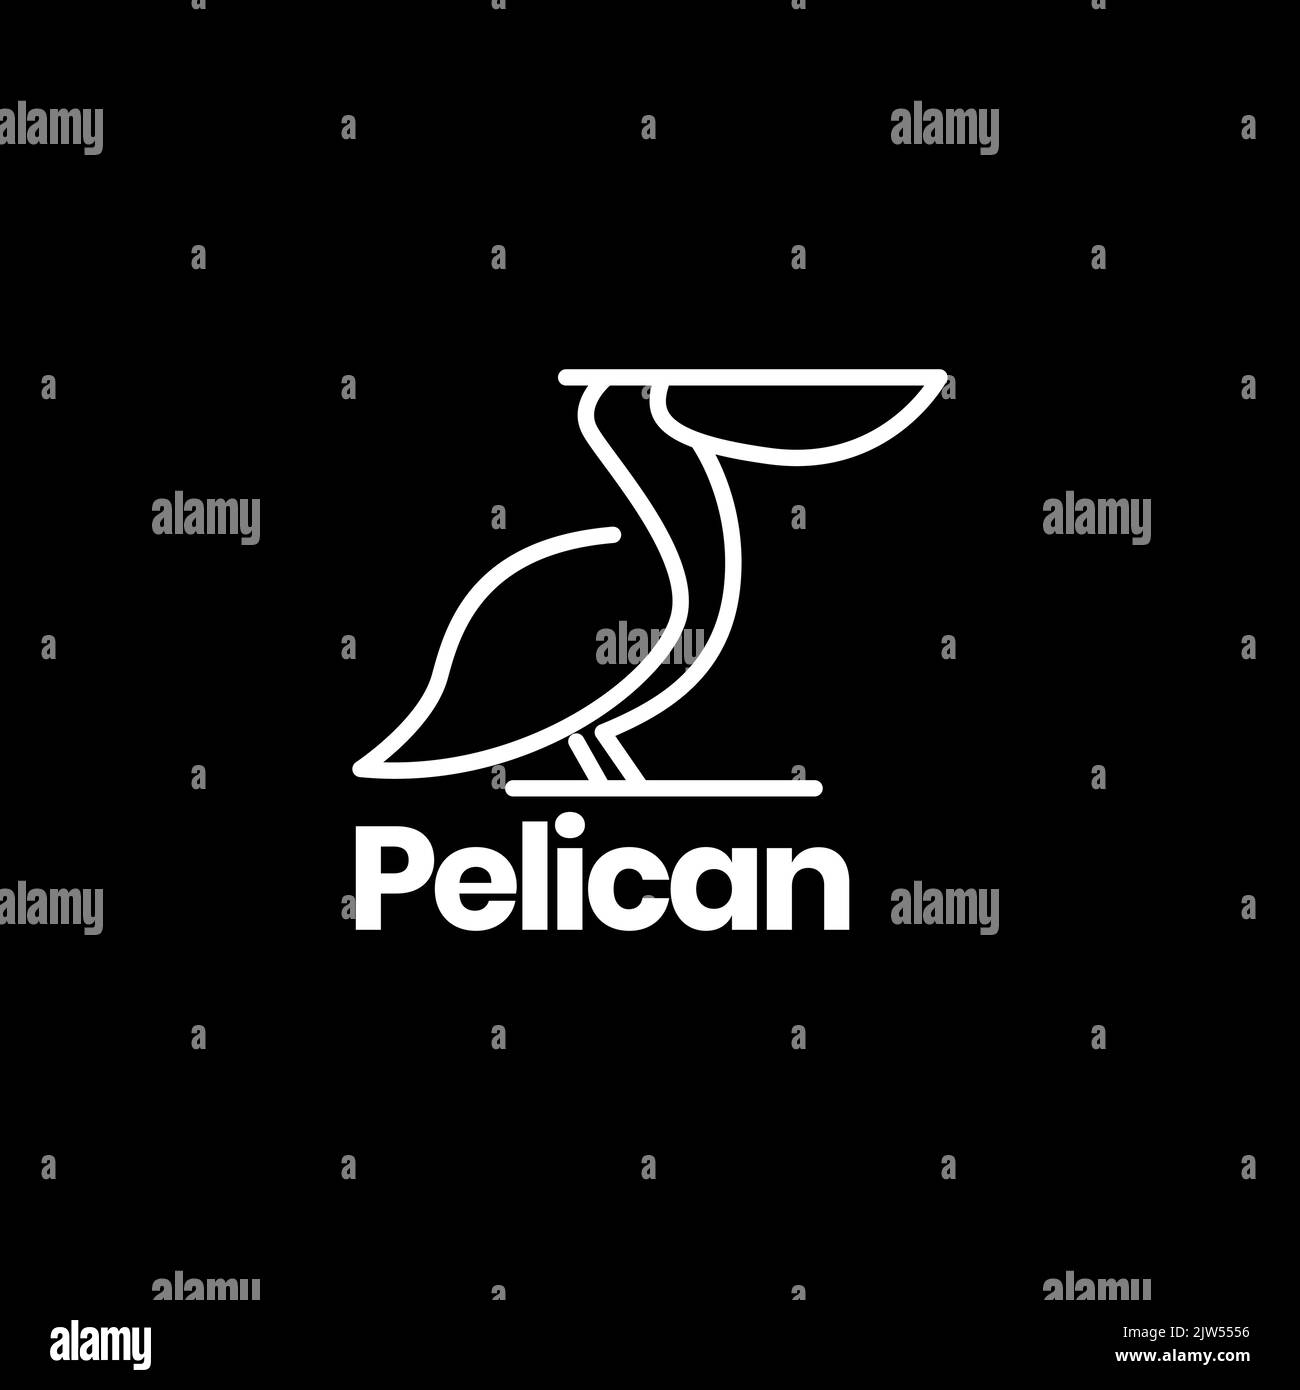 pelican lines art modern logo design Stock Vector